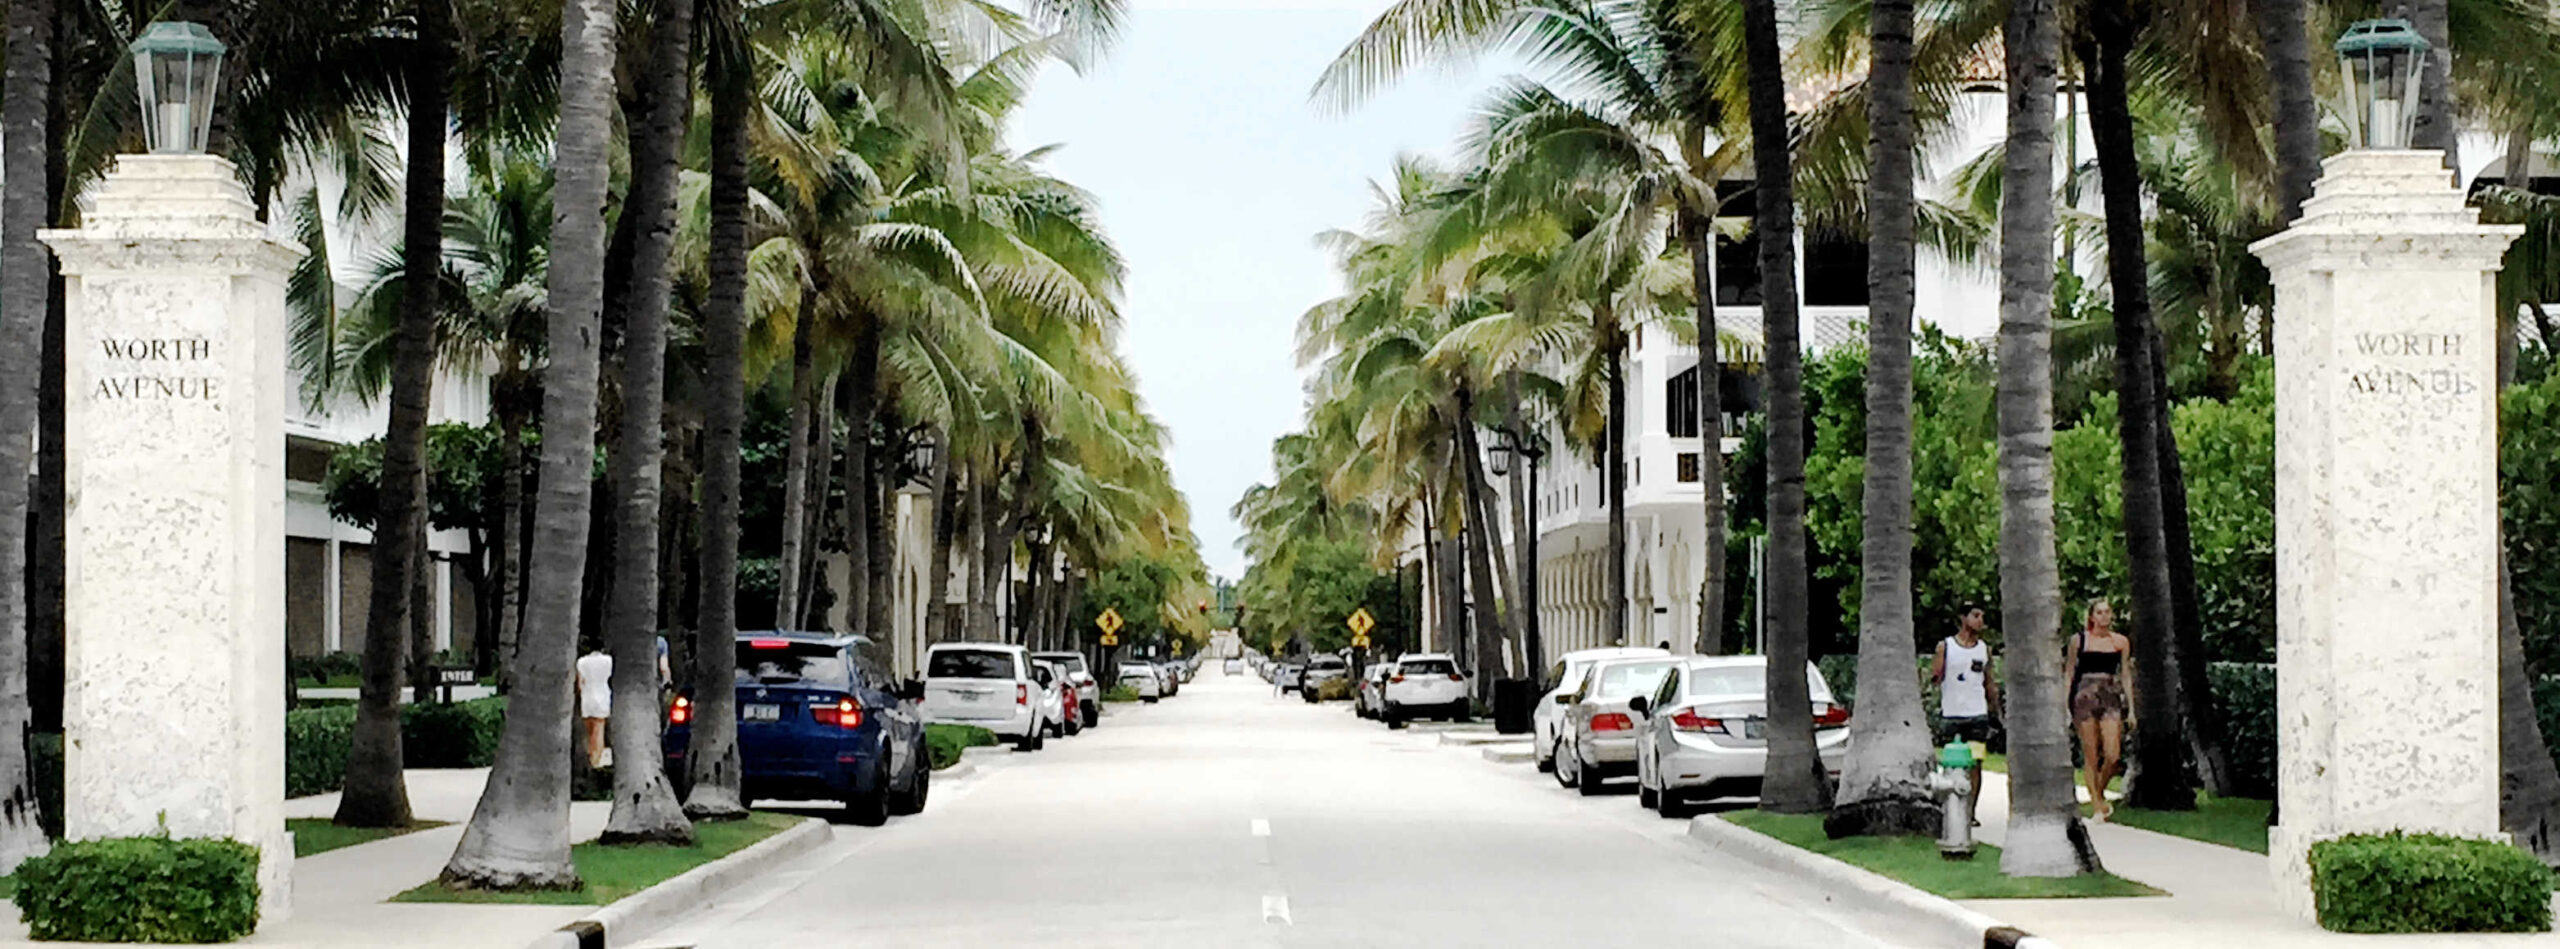 Street View - Limestone columns and palm trees - Worth Ave - Matthew Murrey  Design